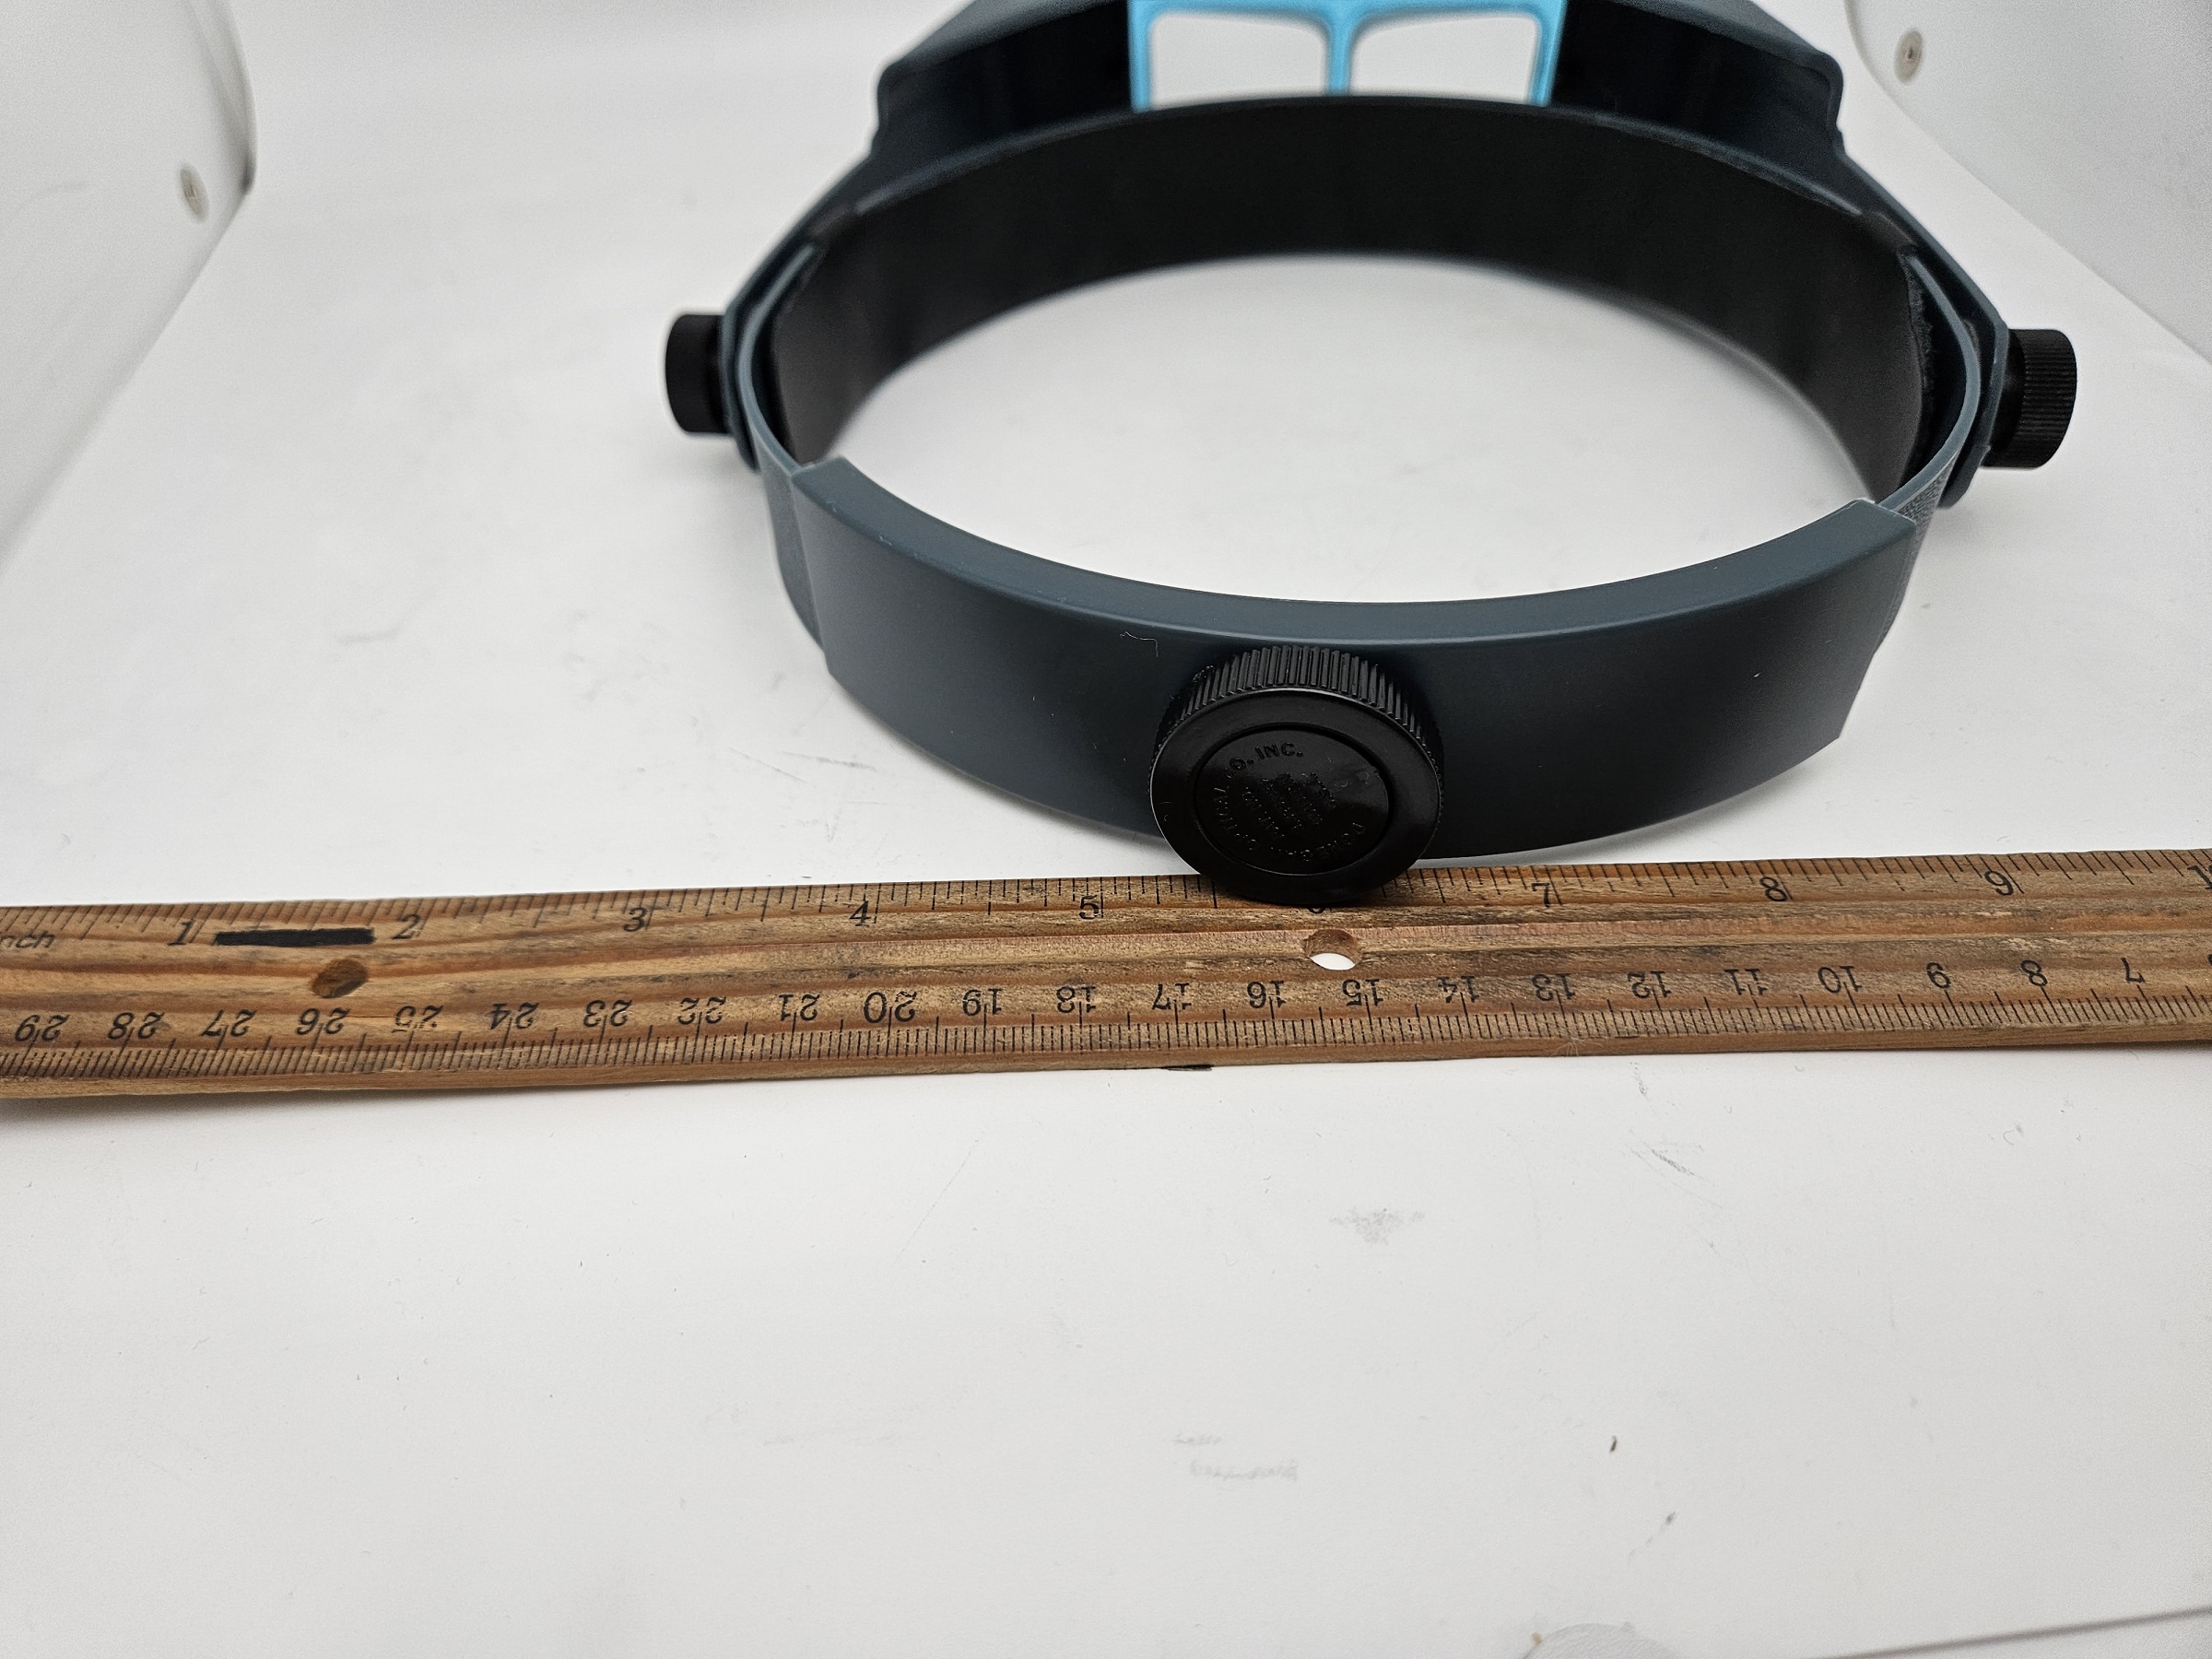 Donegan Optical - Optivisor Binocular Magnifier